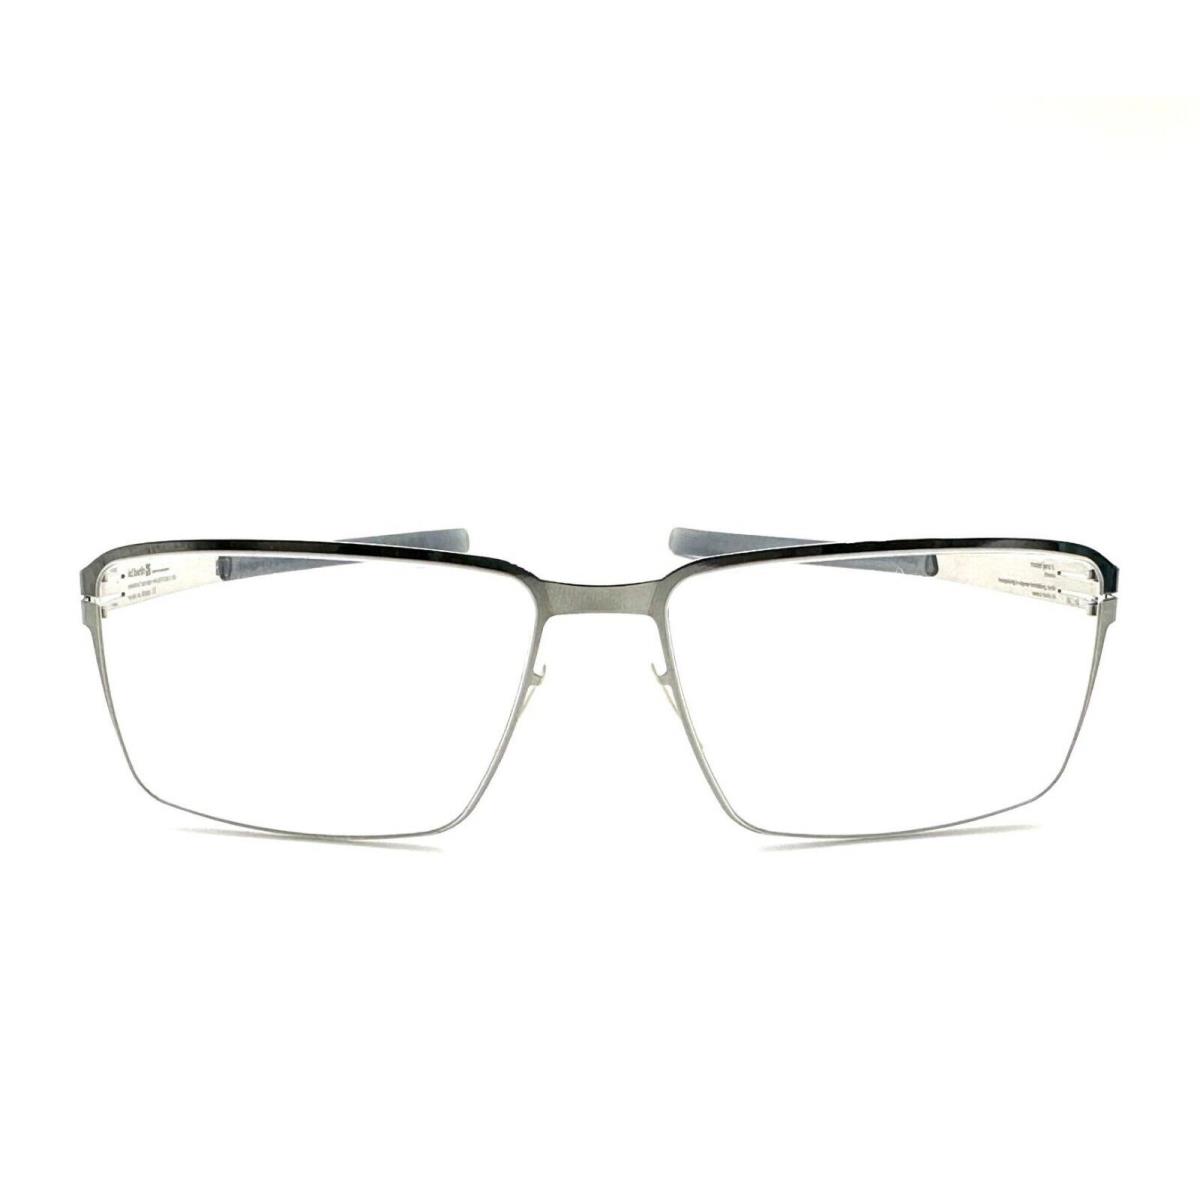 ic Berlin Jens K. Eyeglasses Chrome/grey/rx-clear/flex Lens 55mm